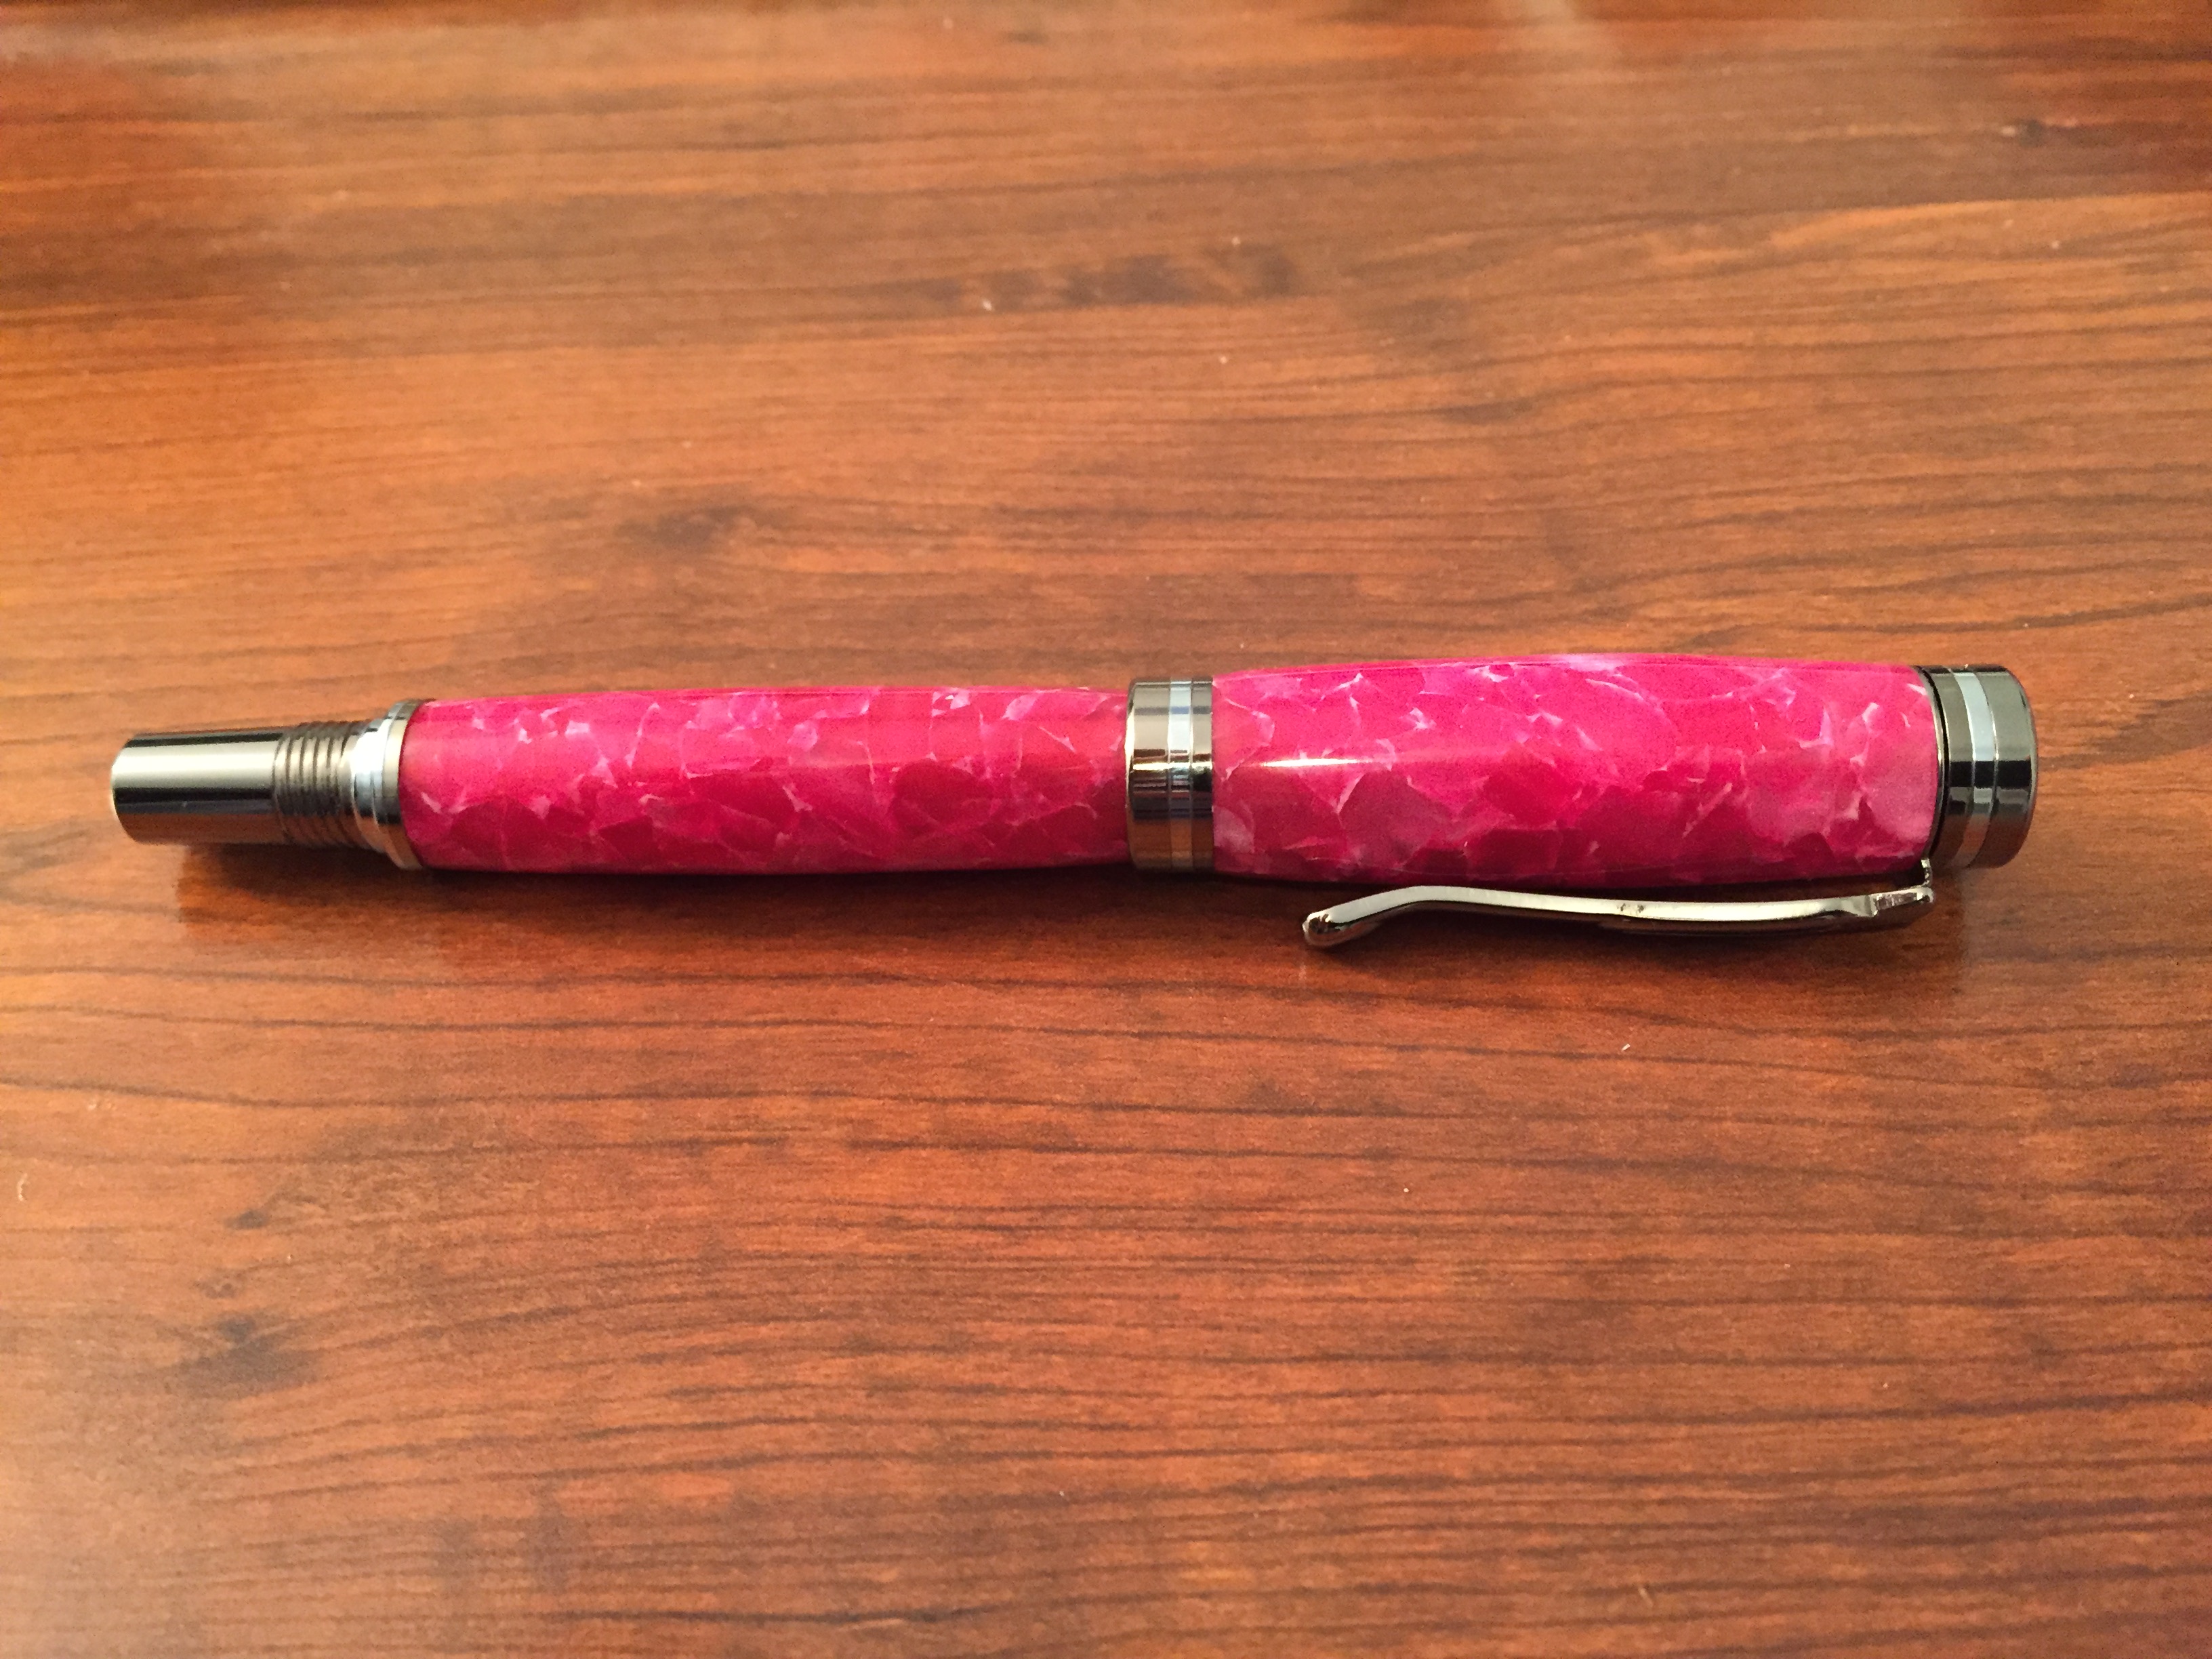 Wife’s pink pen